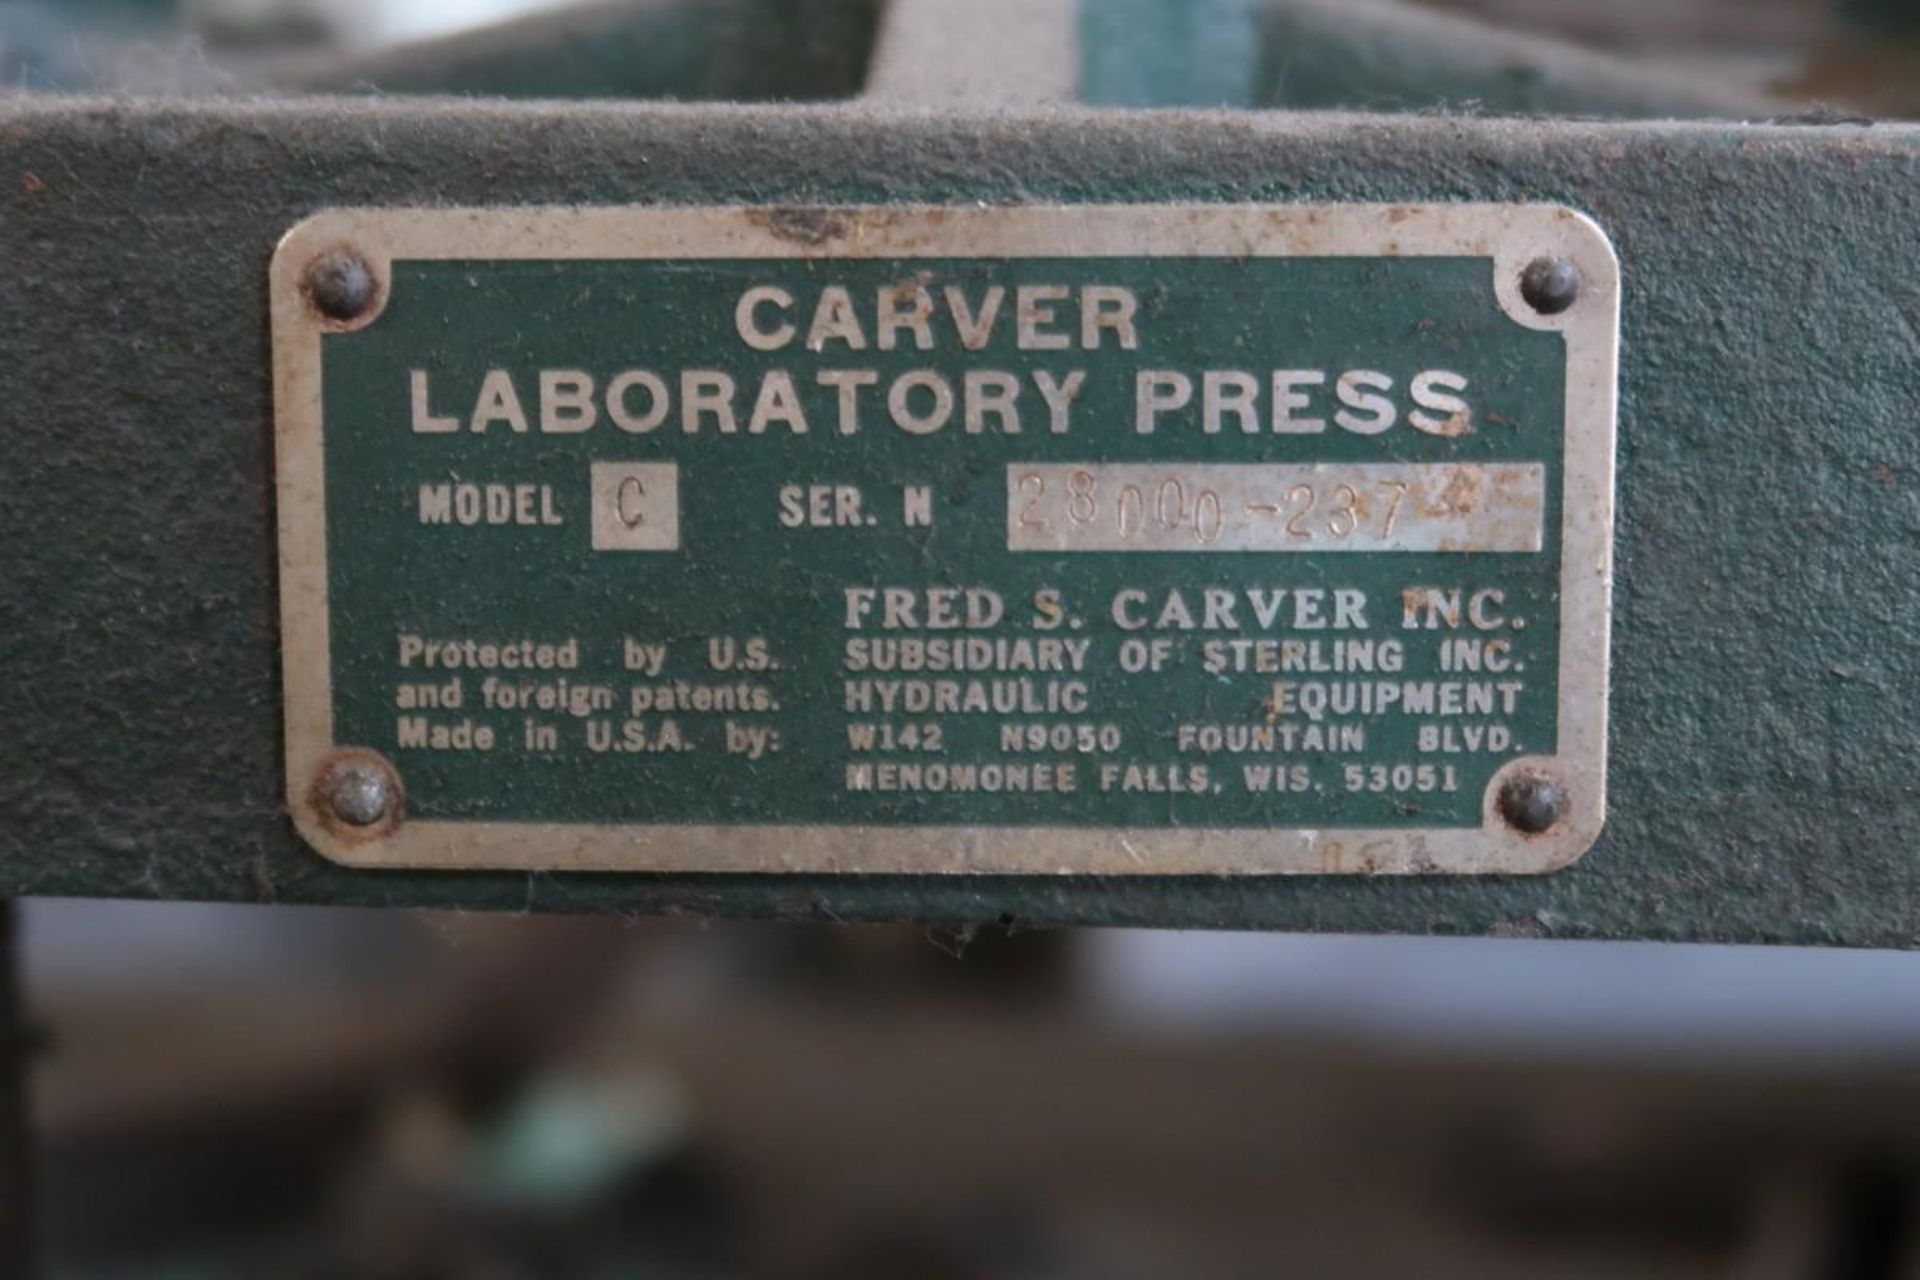 Carver C Laboratory Press - Image 2 of 2